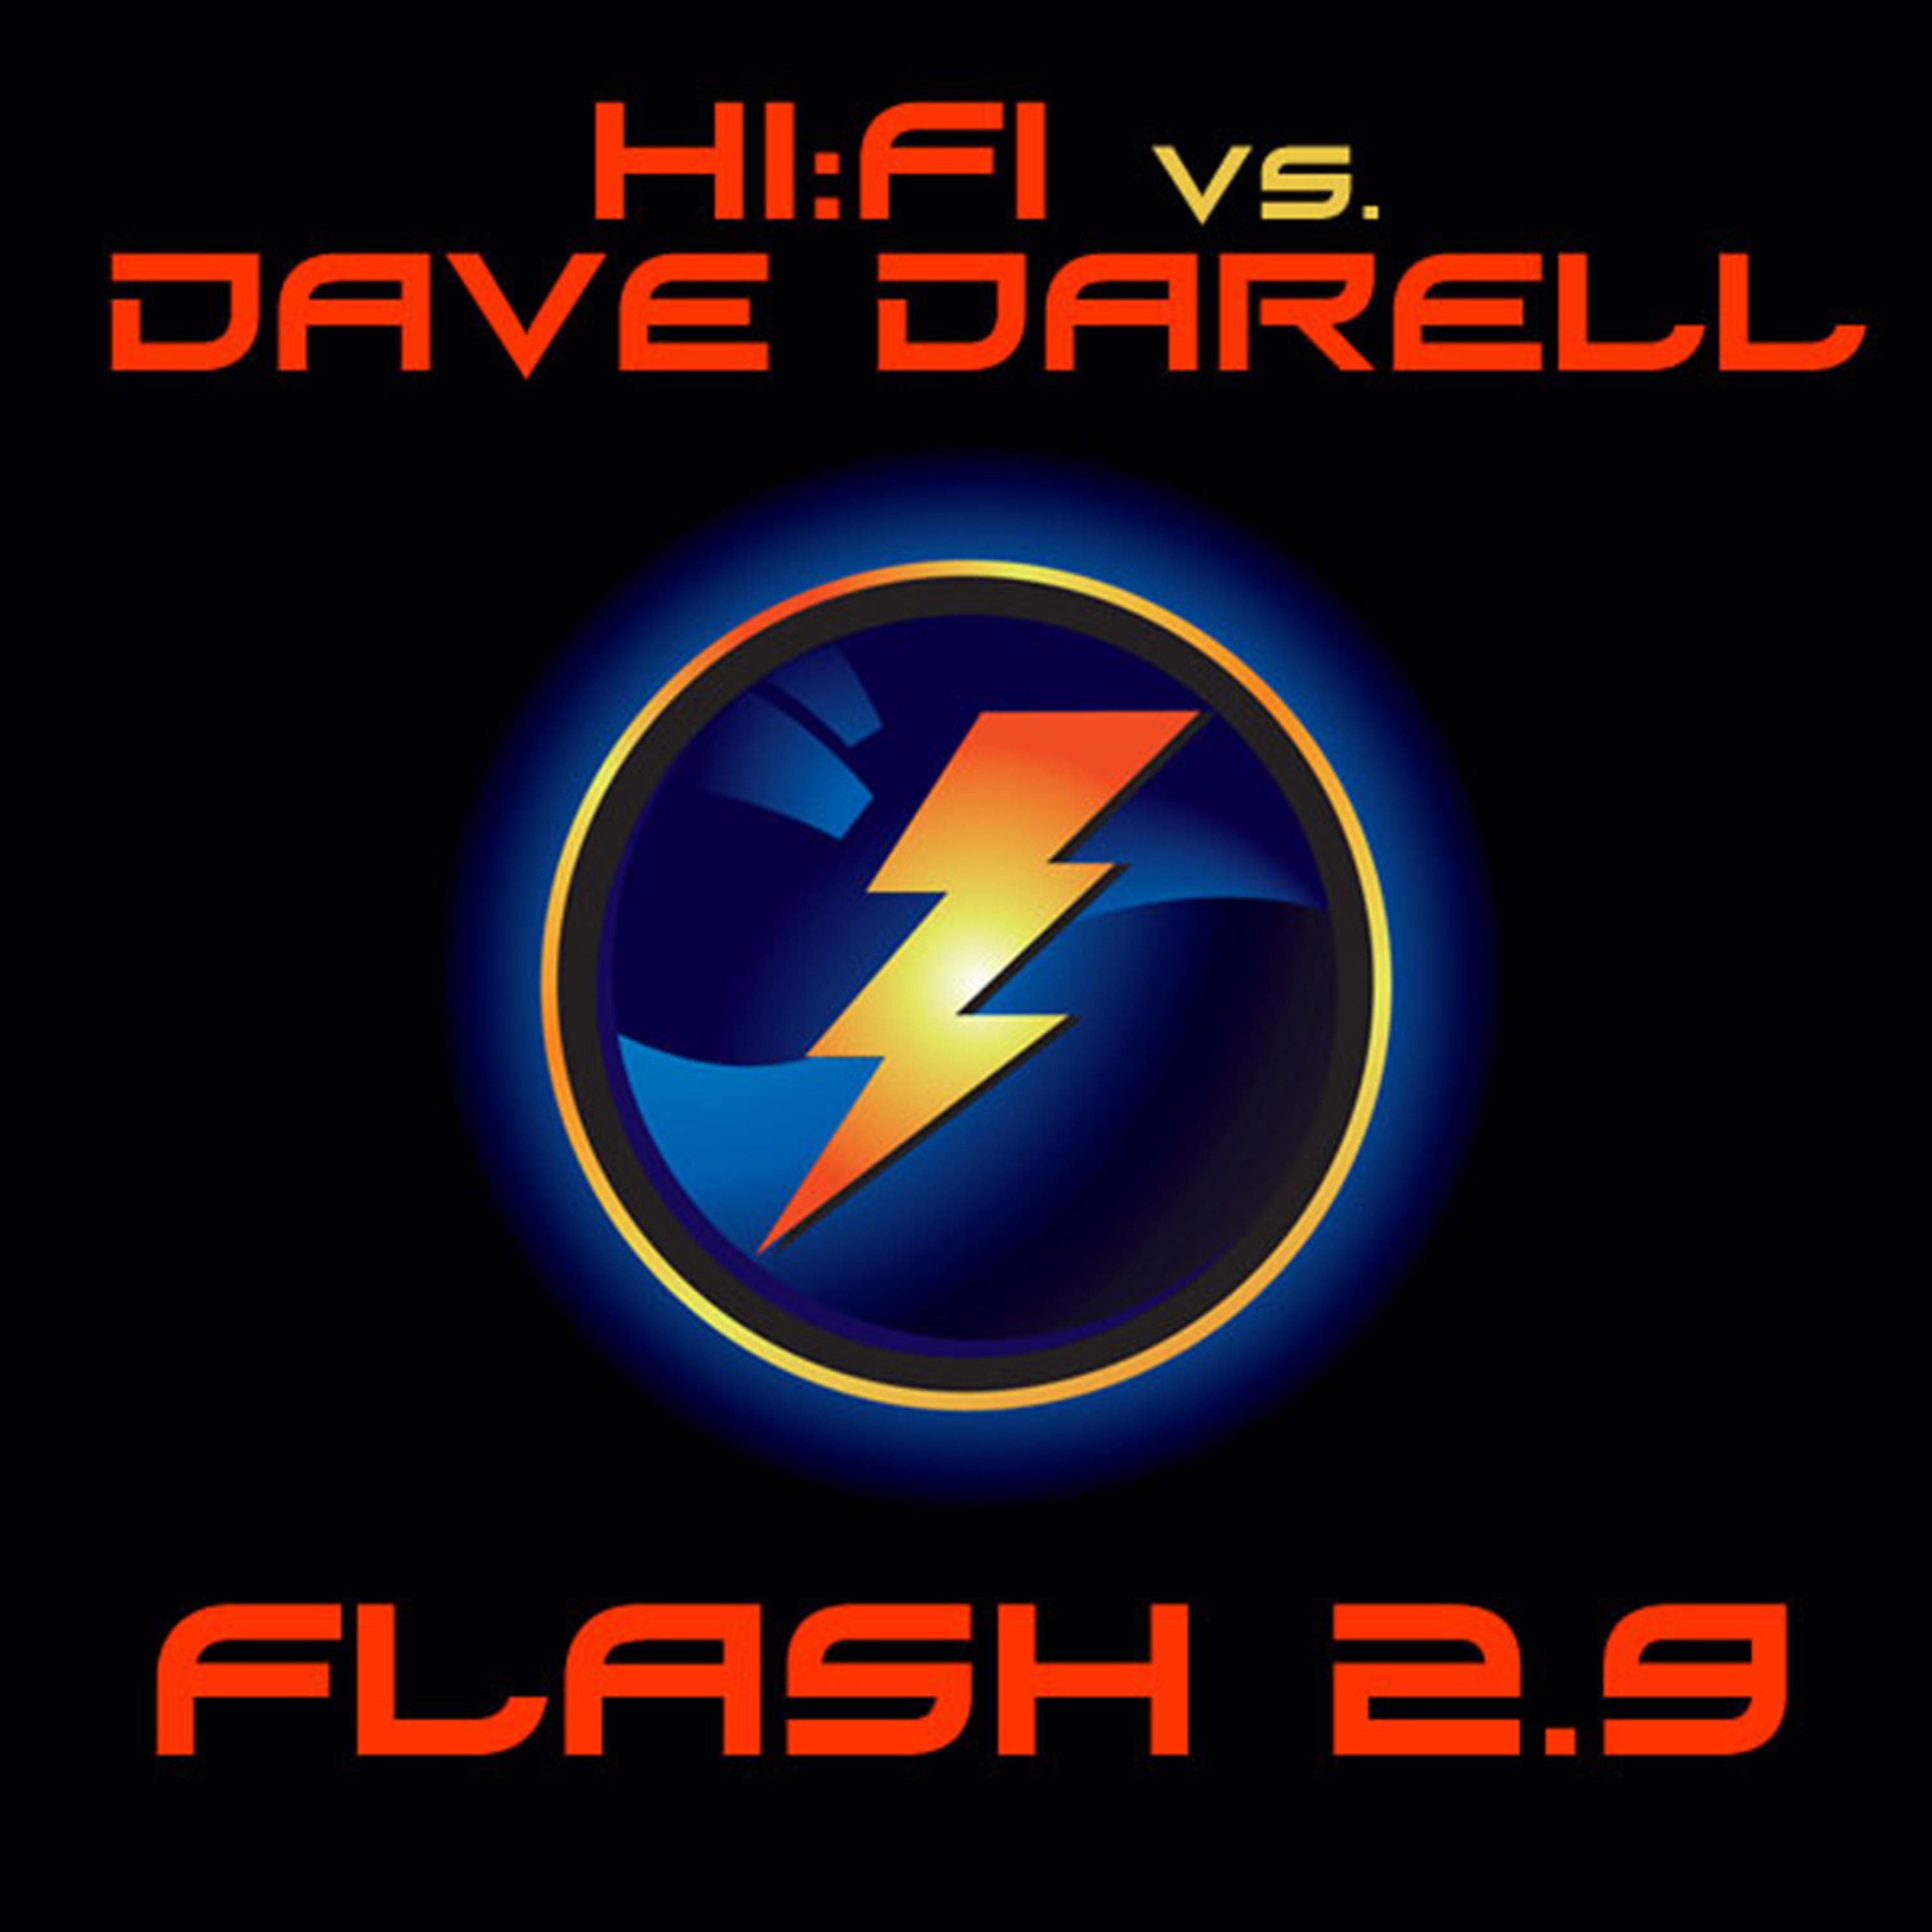 Flash 2.9 (Hi:Fi Original Mix)